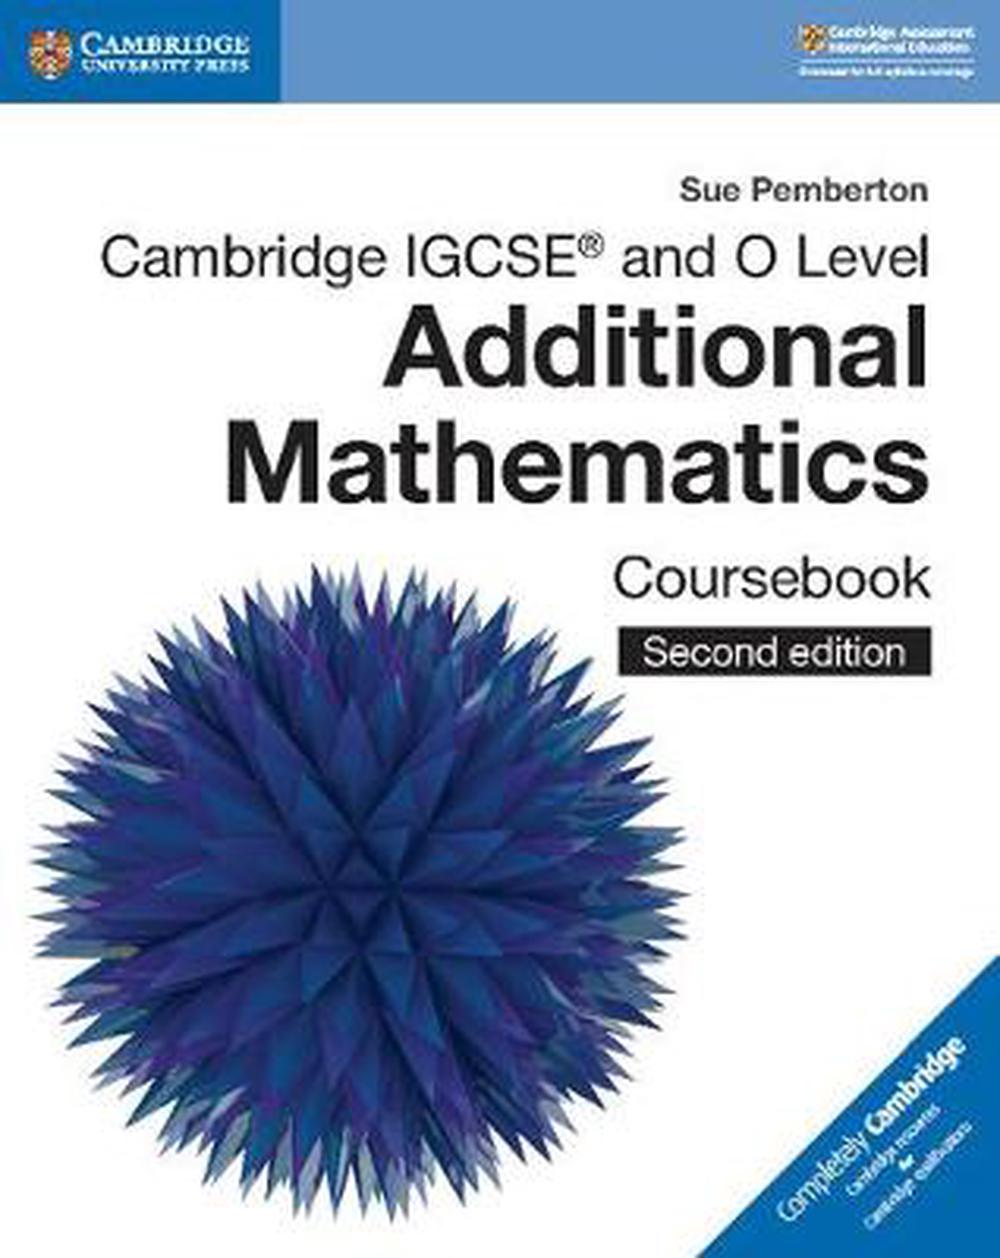 cambridge-igcse-r-and-o-level-additional-mathematics-coursebook-by-sue-pembert-9781108411660